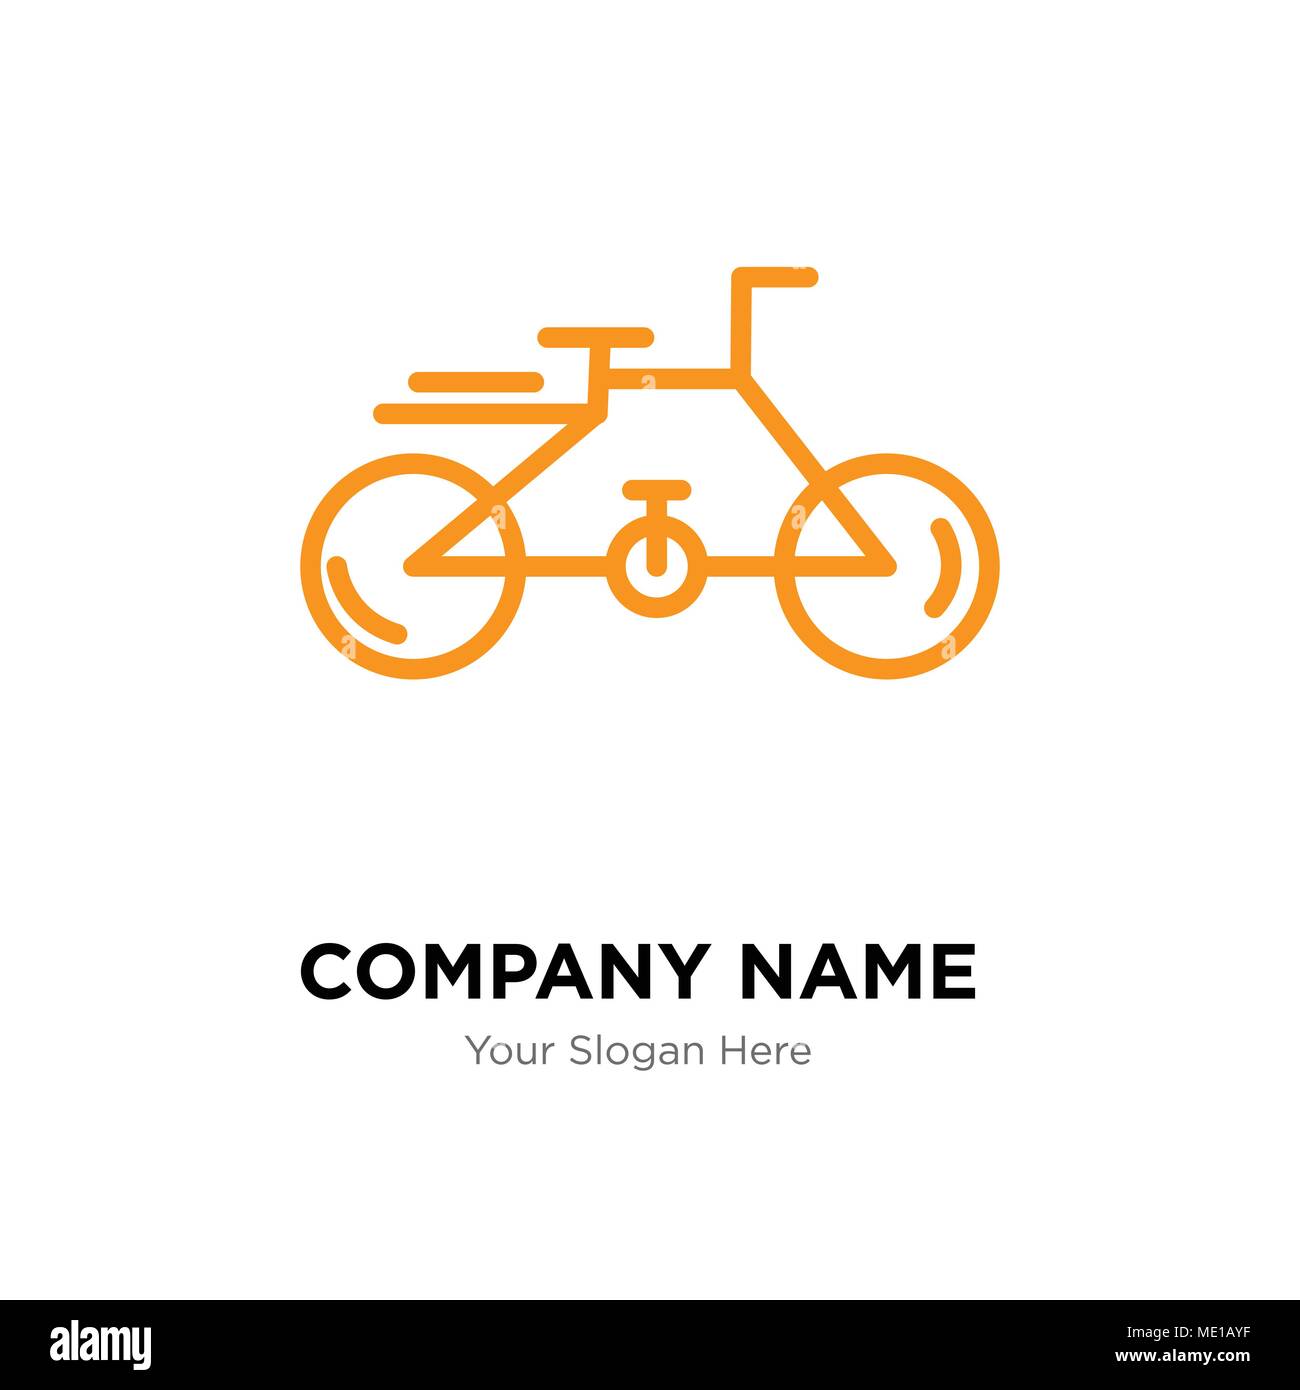 bike logo design samples